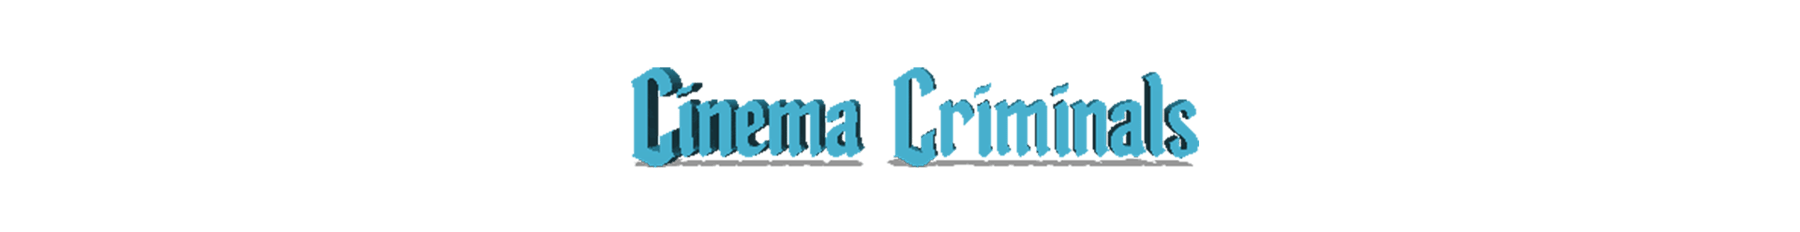 Cinema Criminals Home